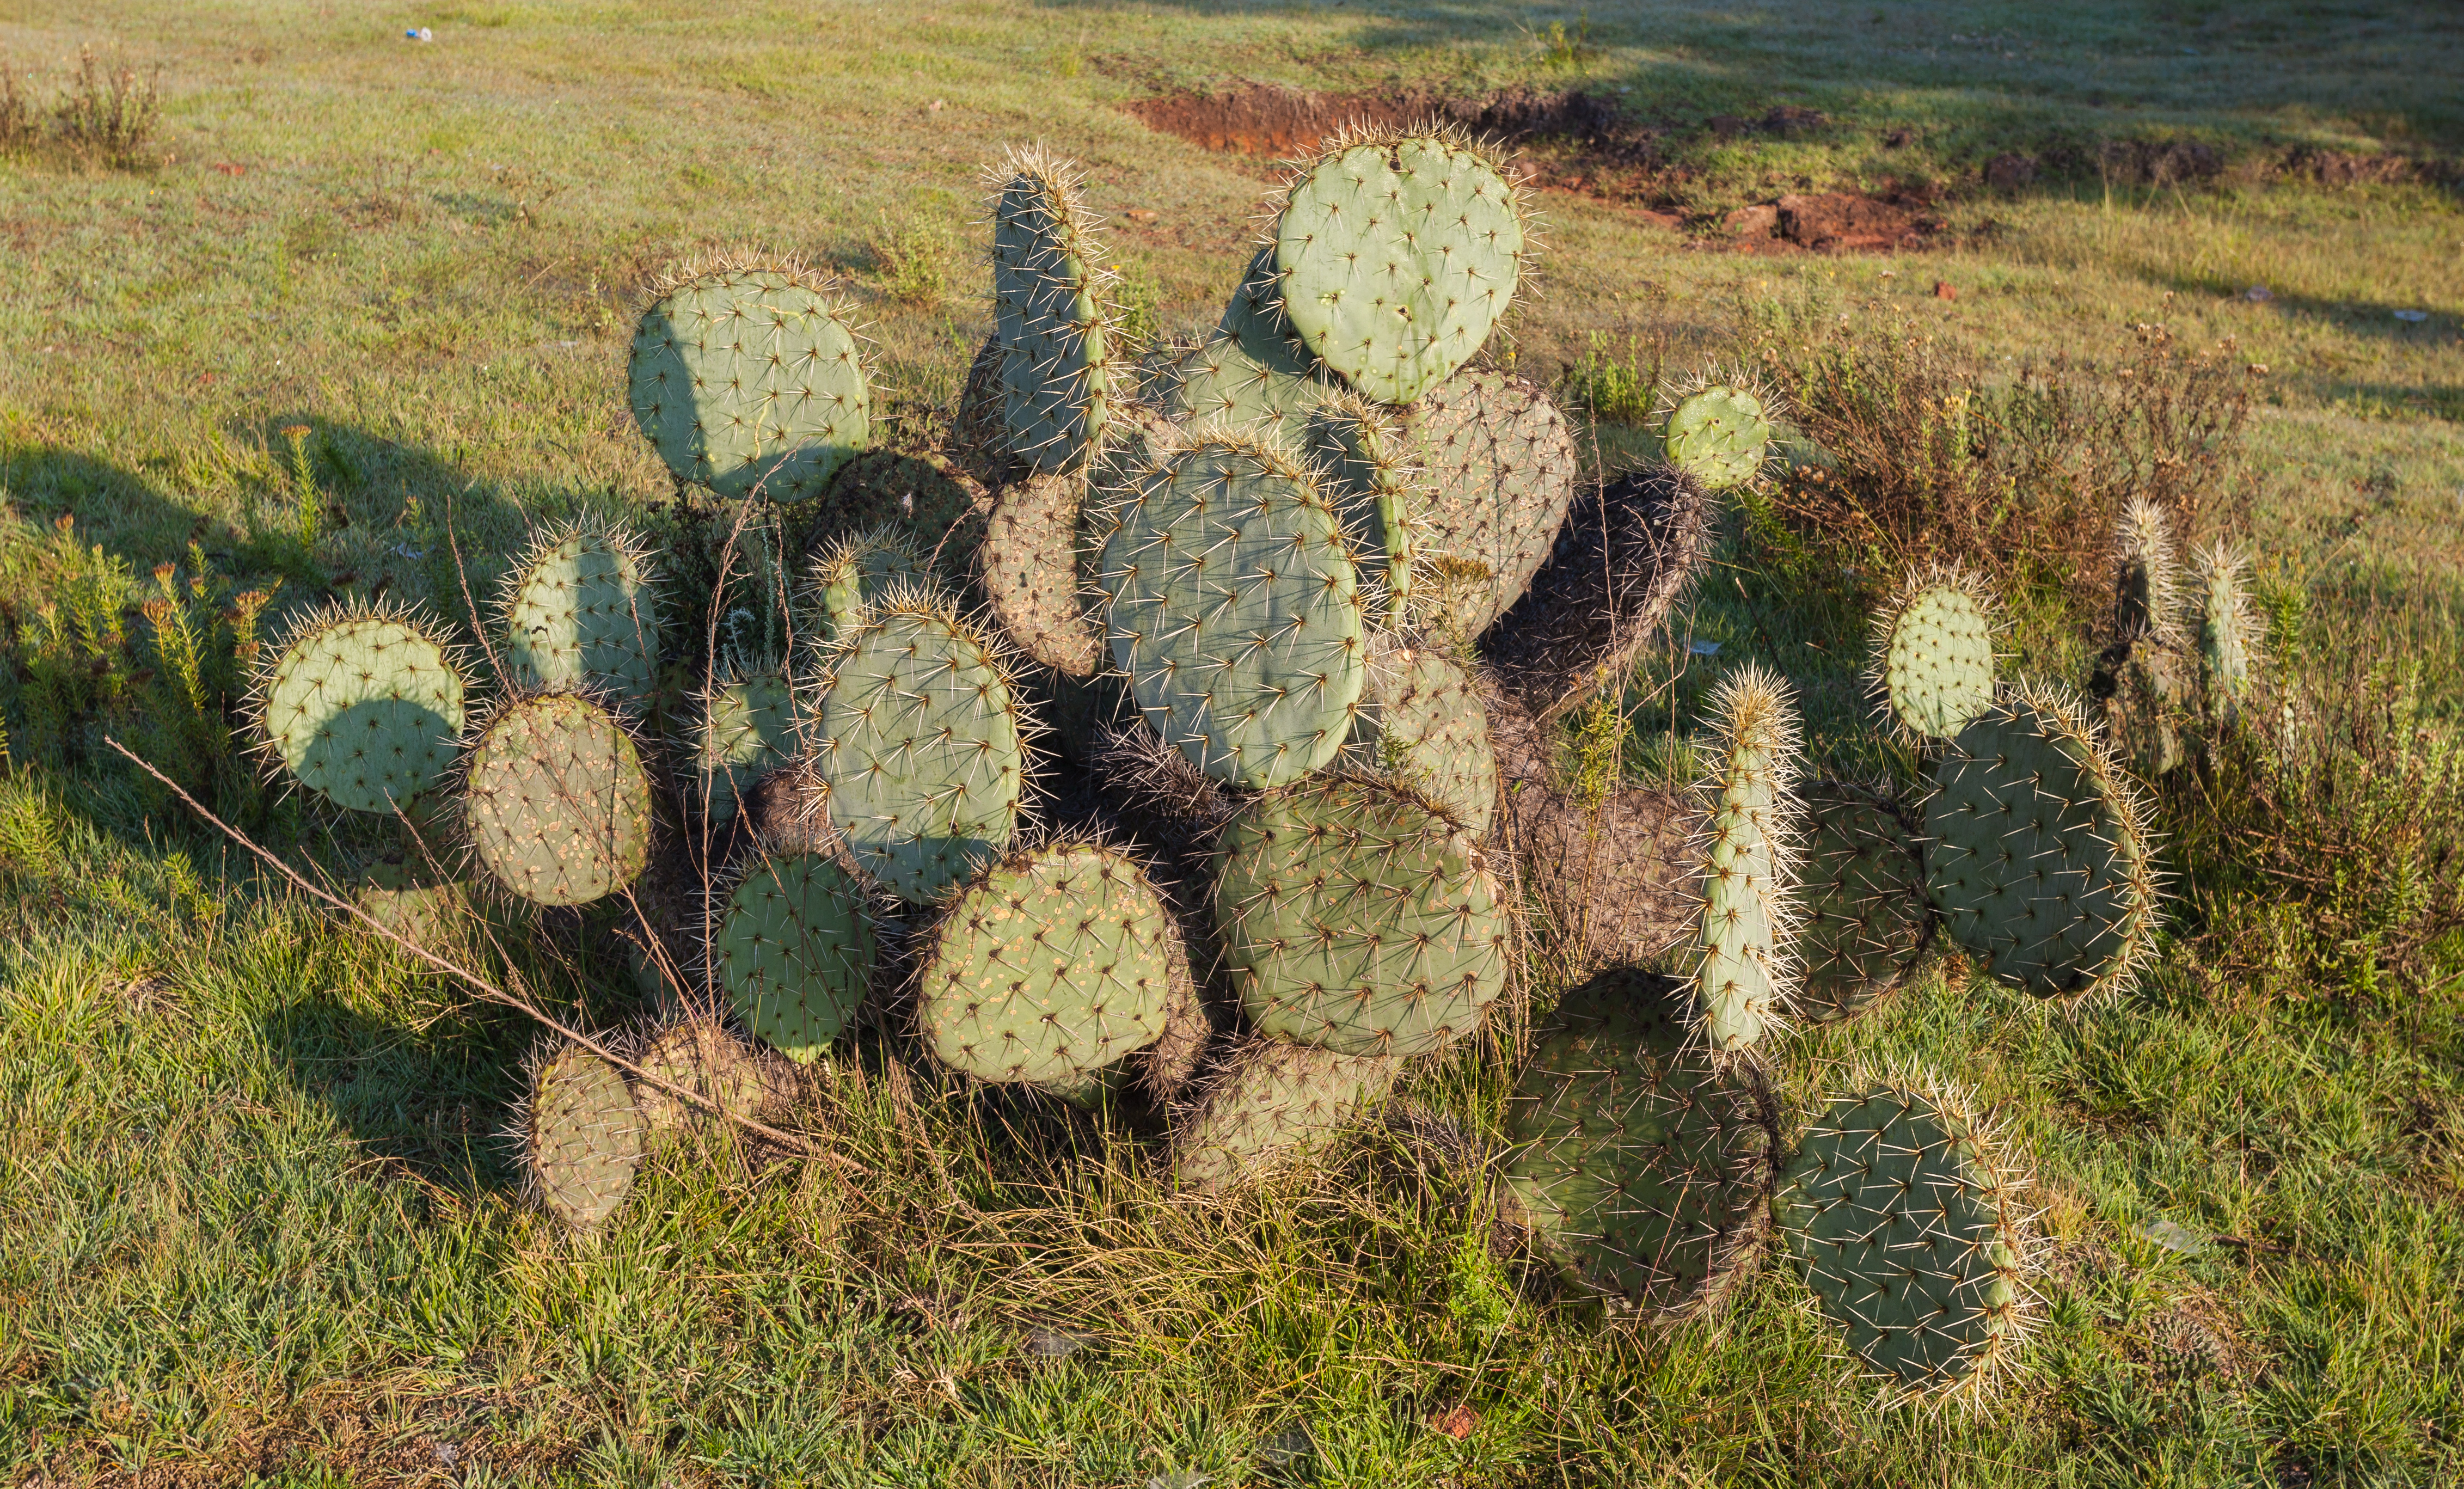 Cactus (Opuntia ficus-indica), Acatlán, Hidalgo, México, 2013-10-11, DD 01